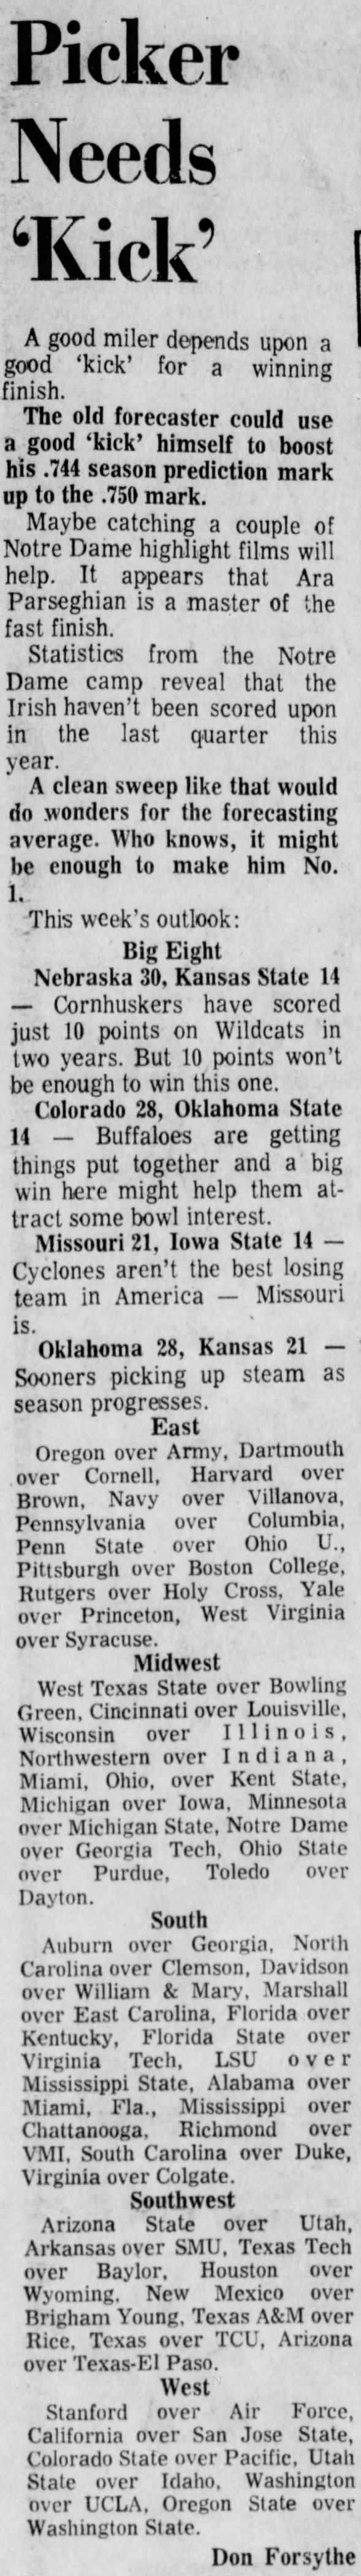 1970.11.13 Don Forsythe predictions, Kansas State week